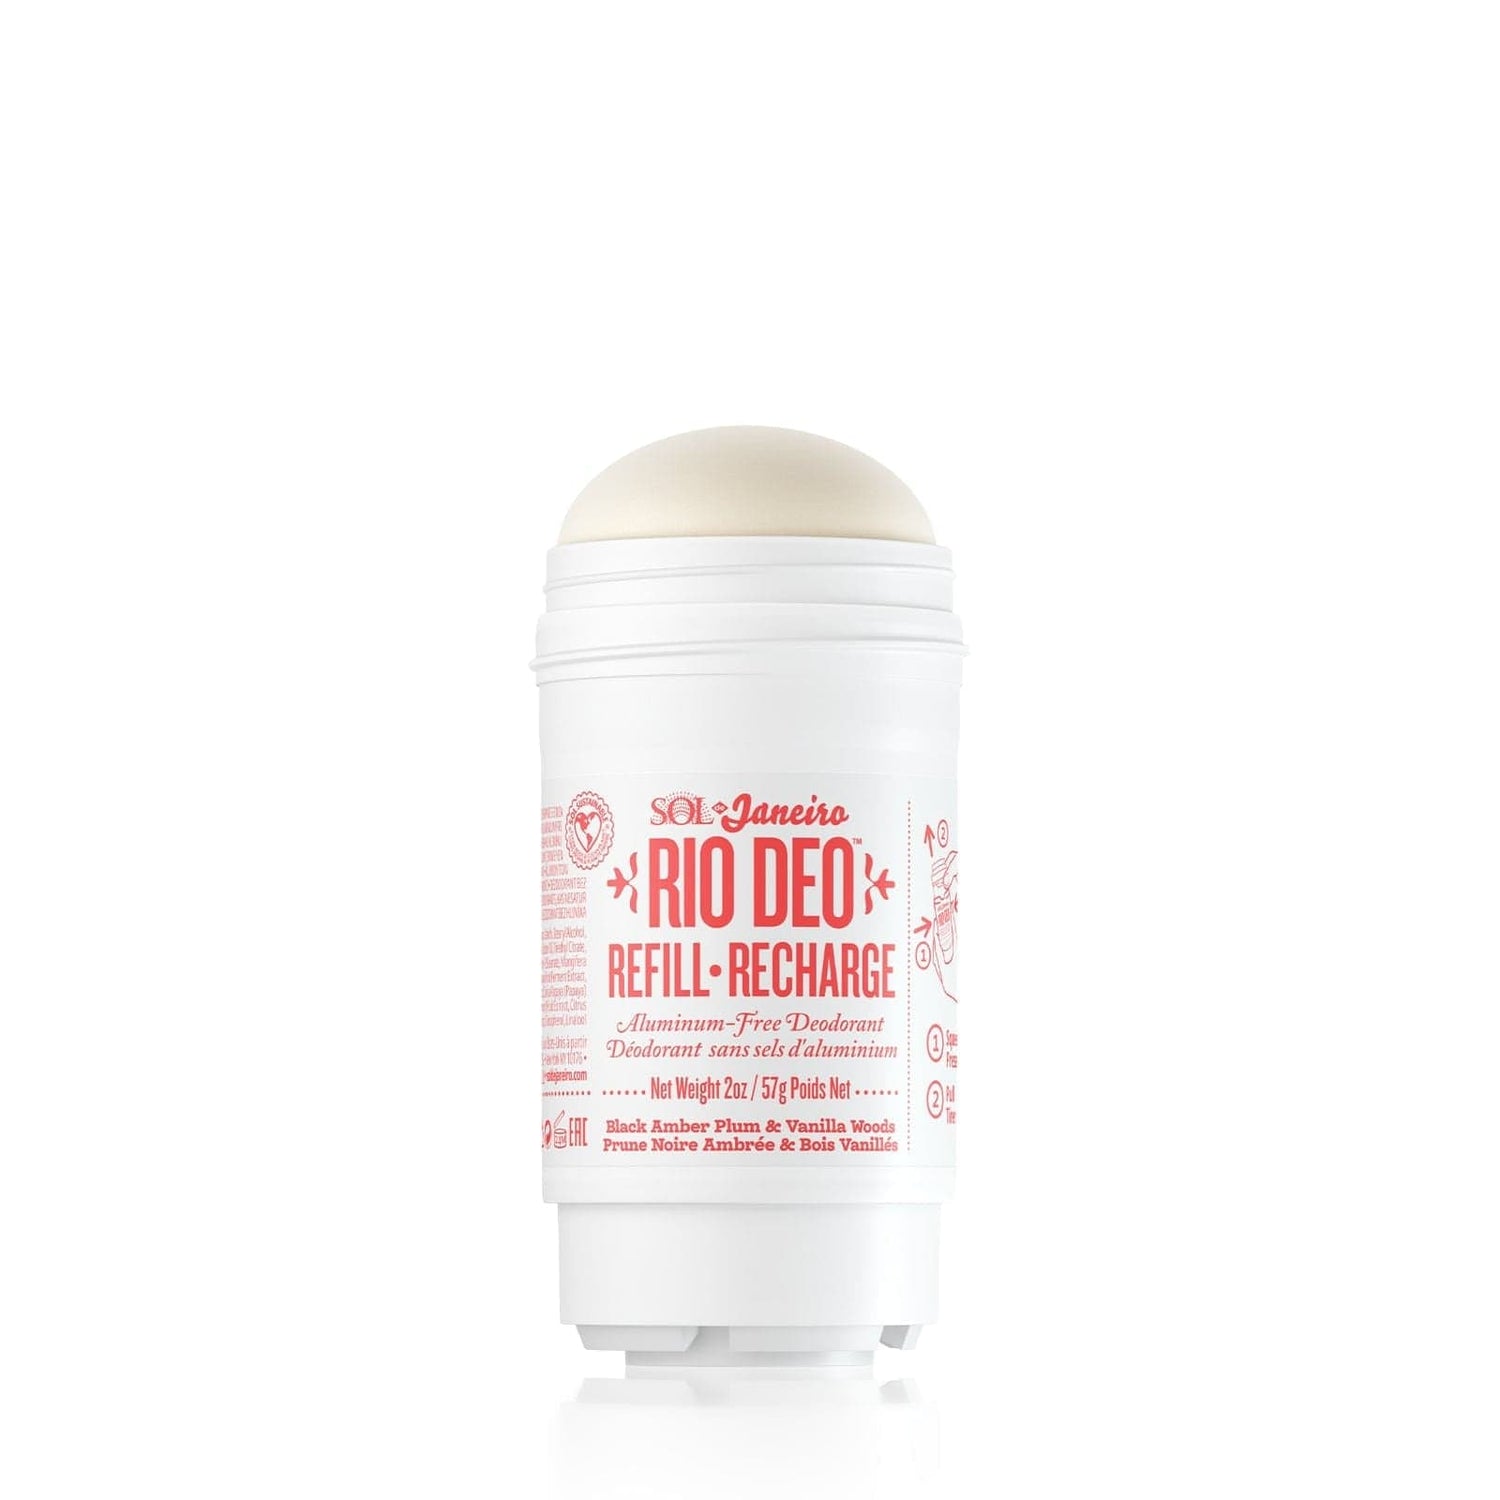 Rio deo aluminum free deodorant cheirosa 40 refill 